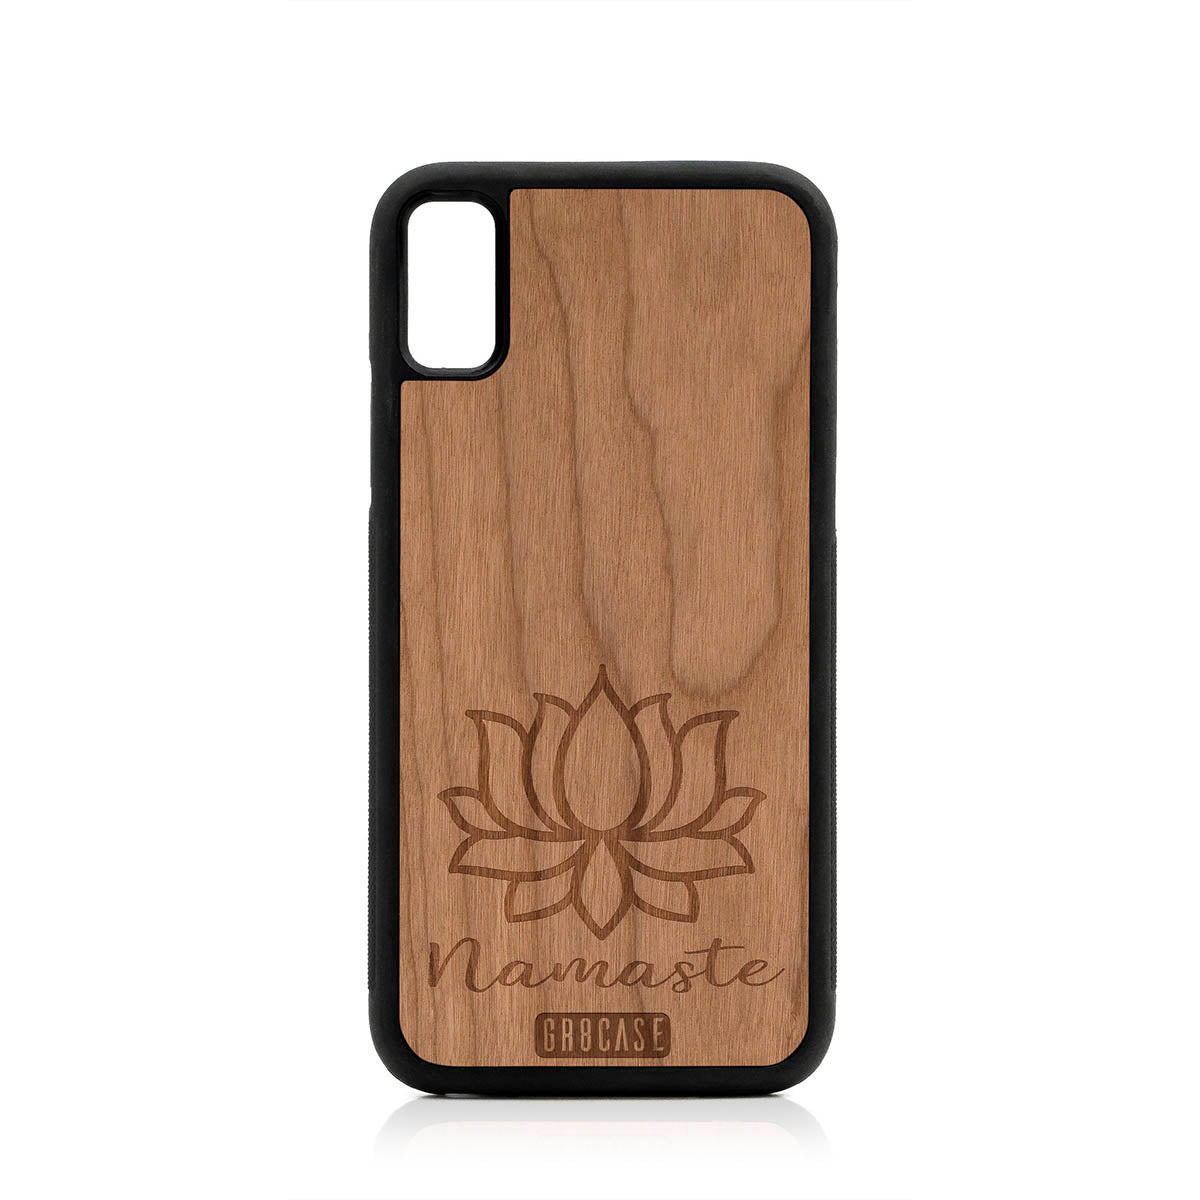 Namaste (Lotus Flower) Design Wood Case For iPhone XS Max